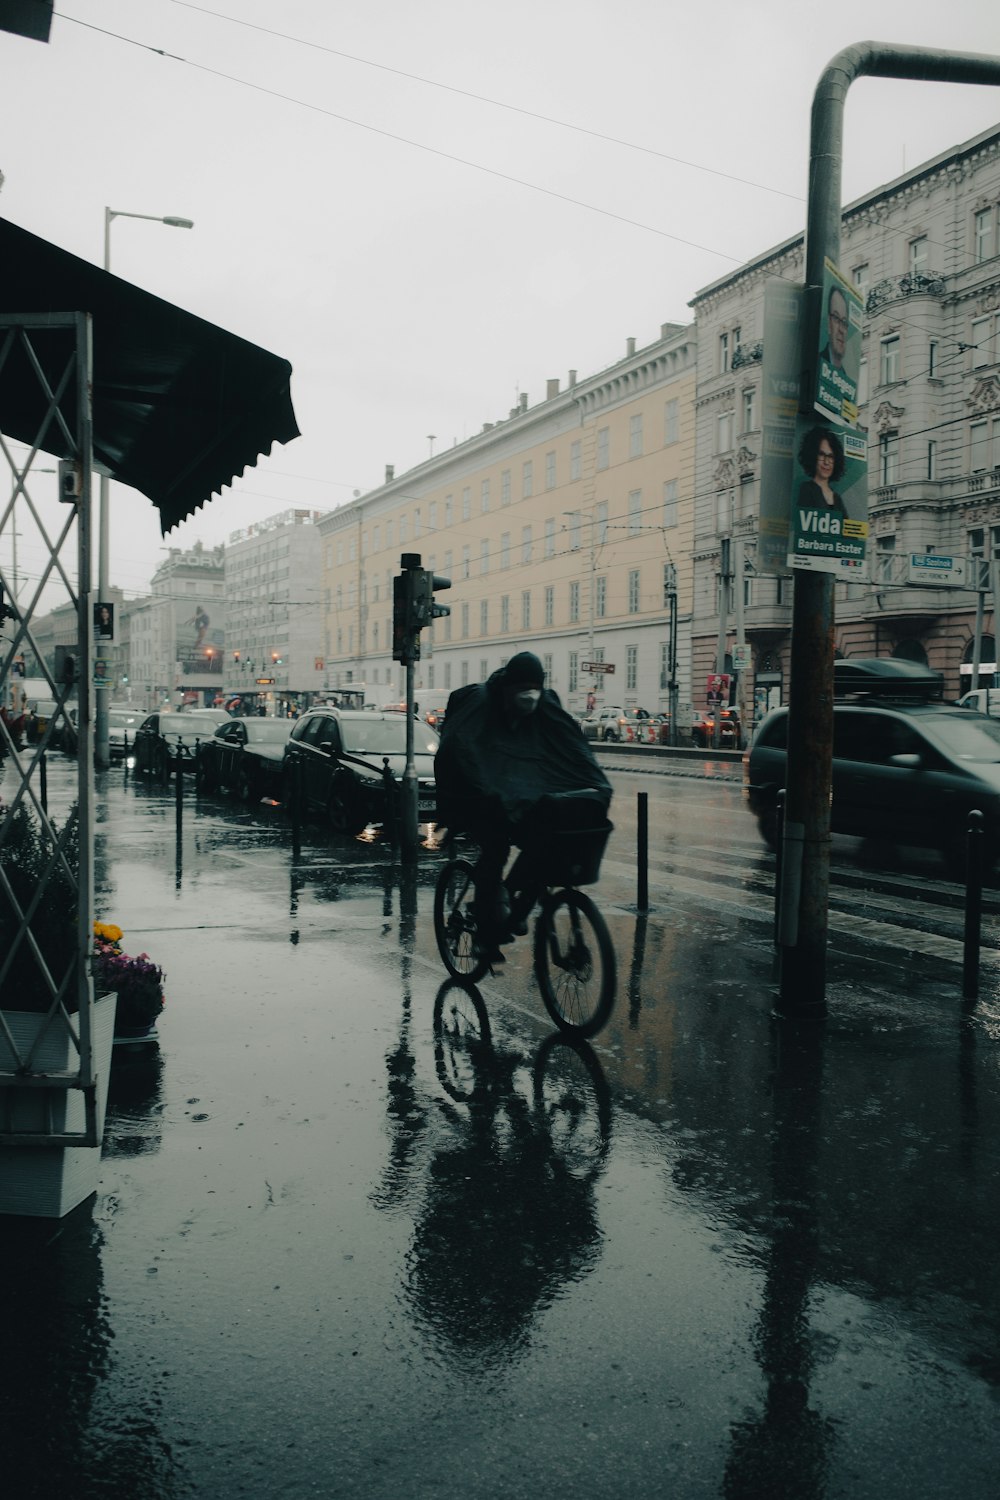 a person riding a bike down a rain soaked street